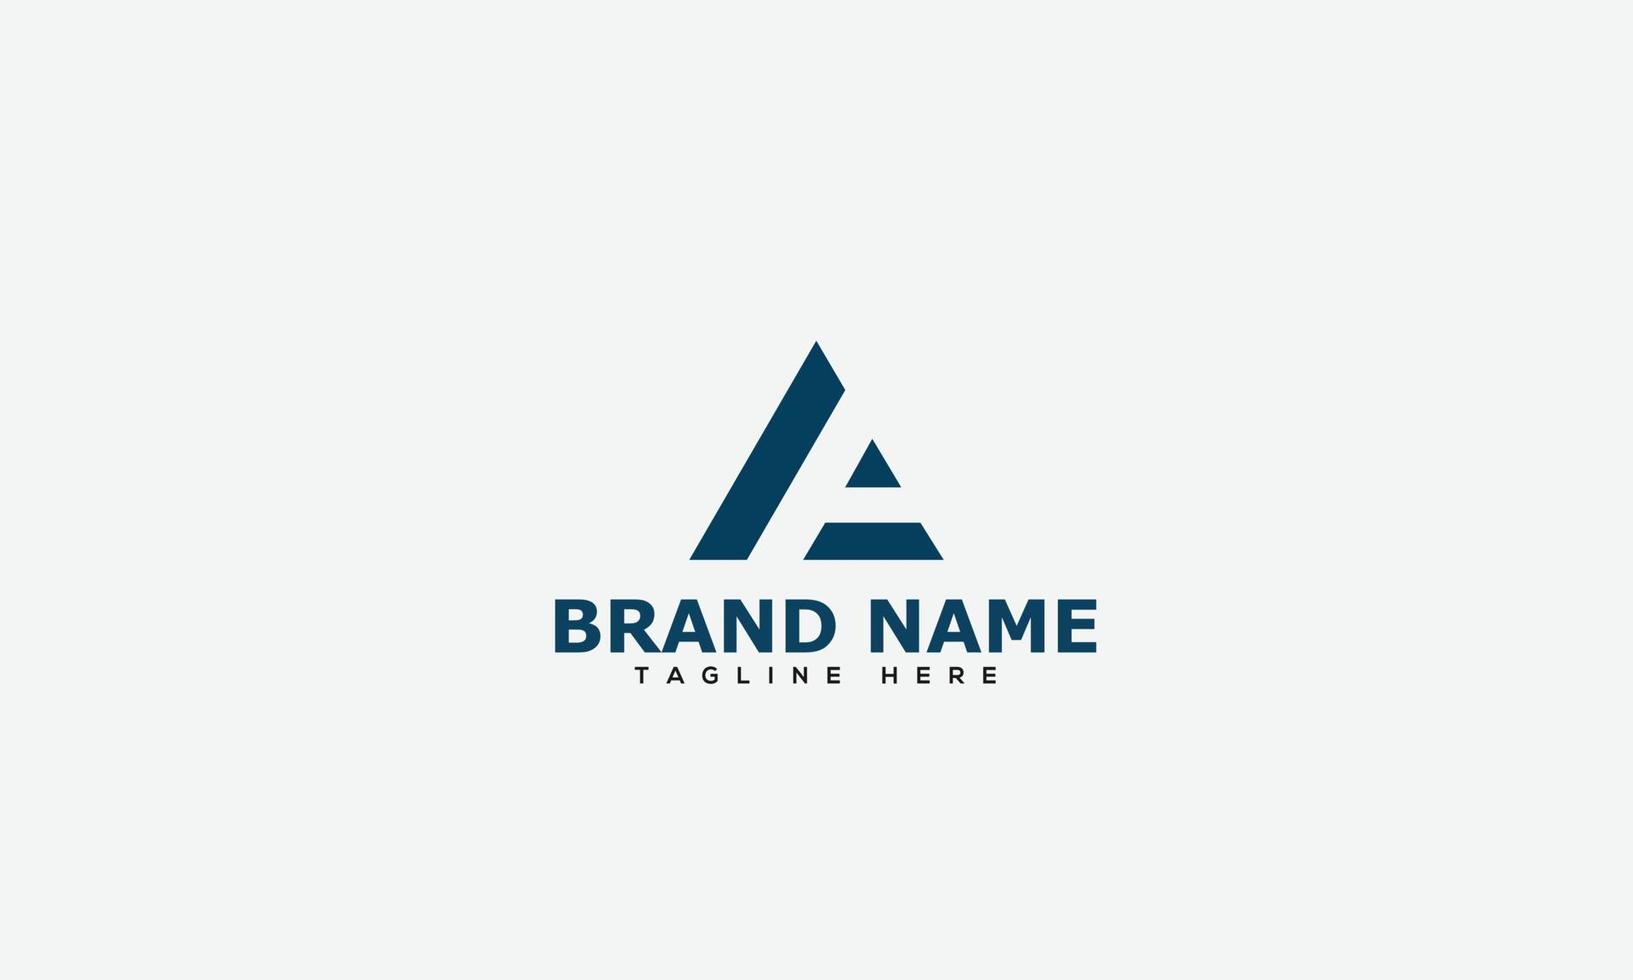 ein Logo-Design-Vorlage, Vektorgrafik-Branding-Element. vektor